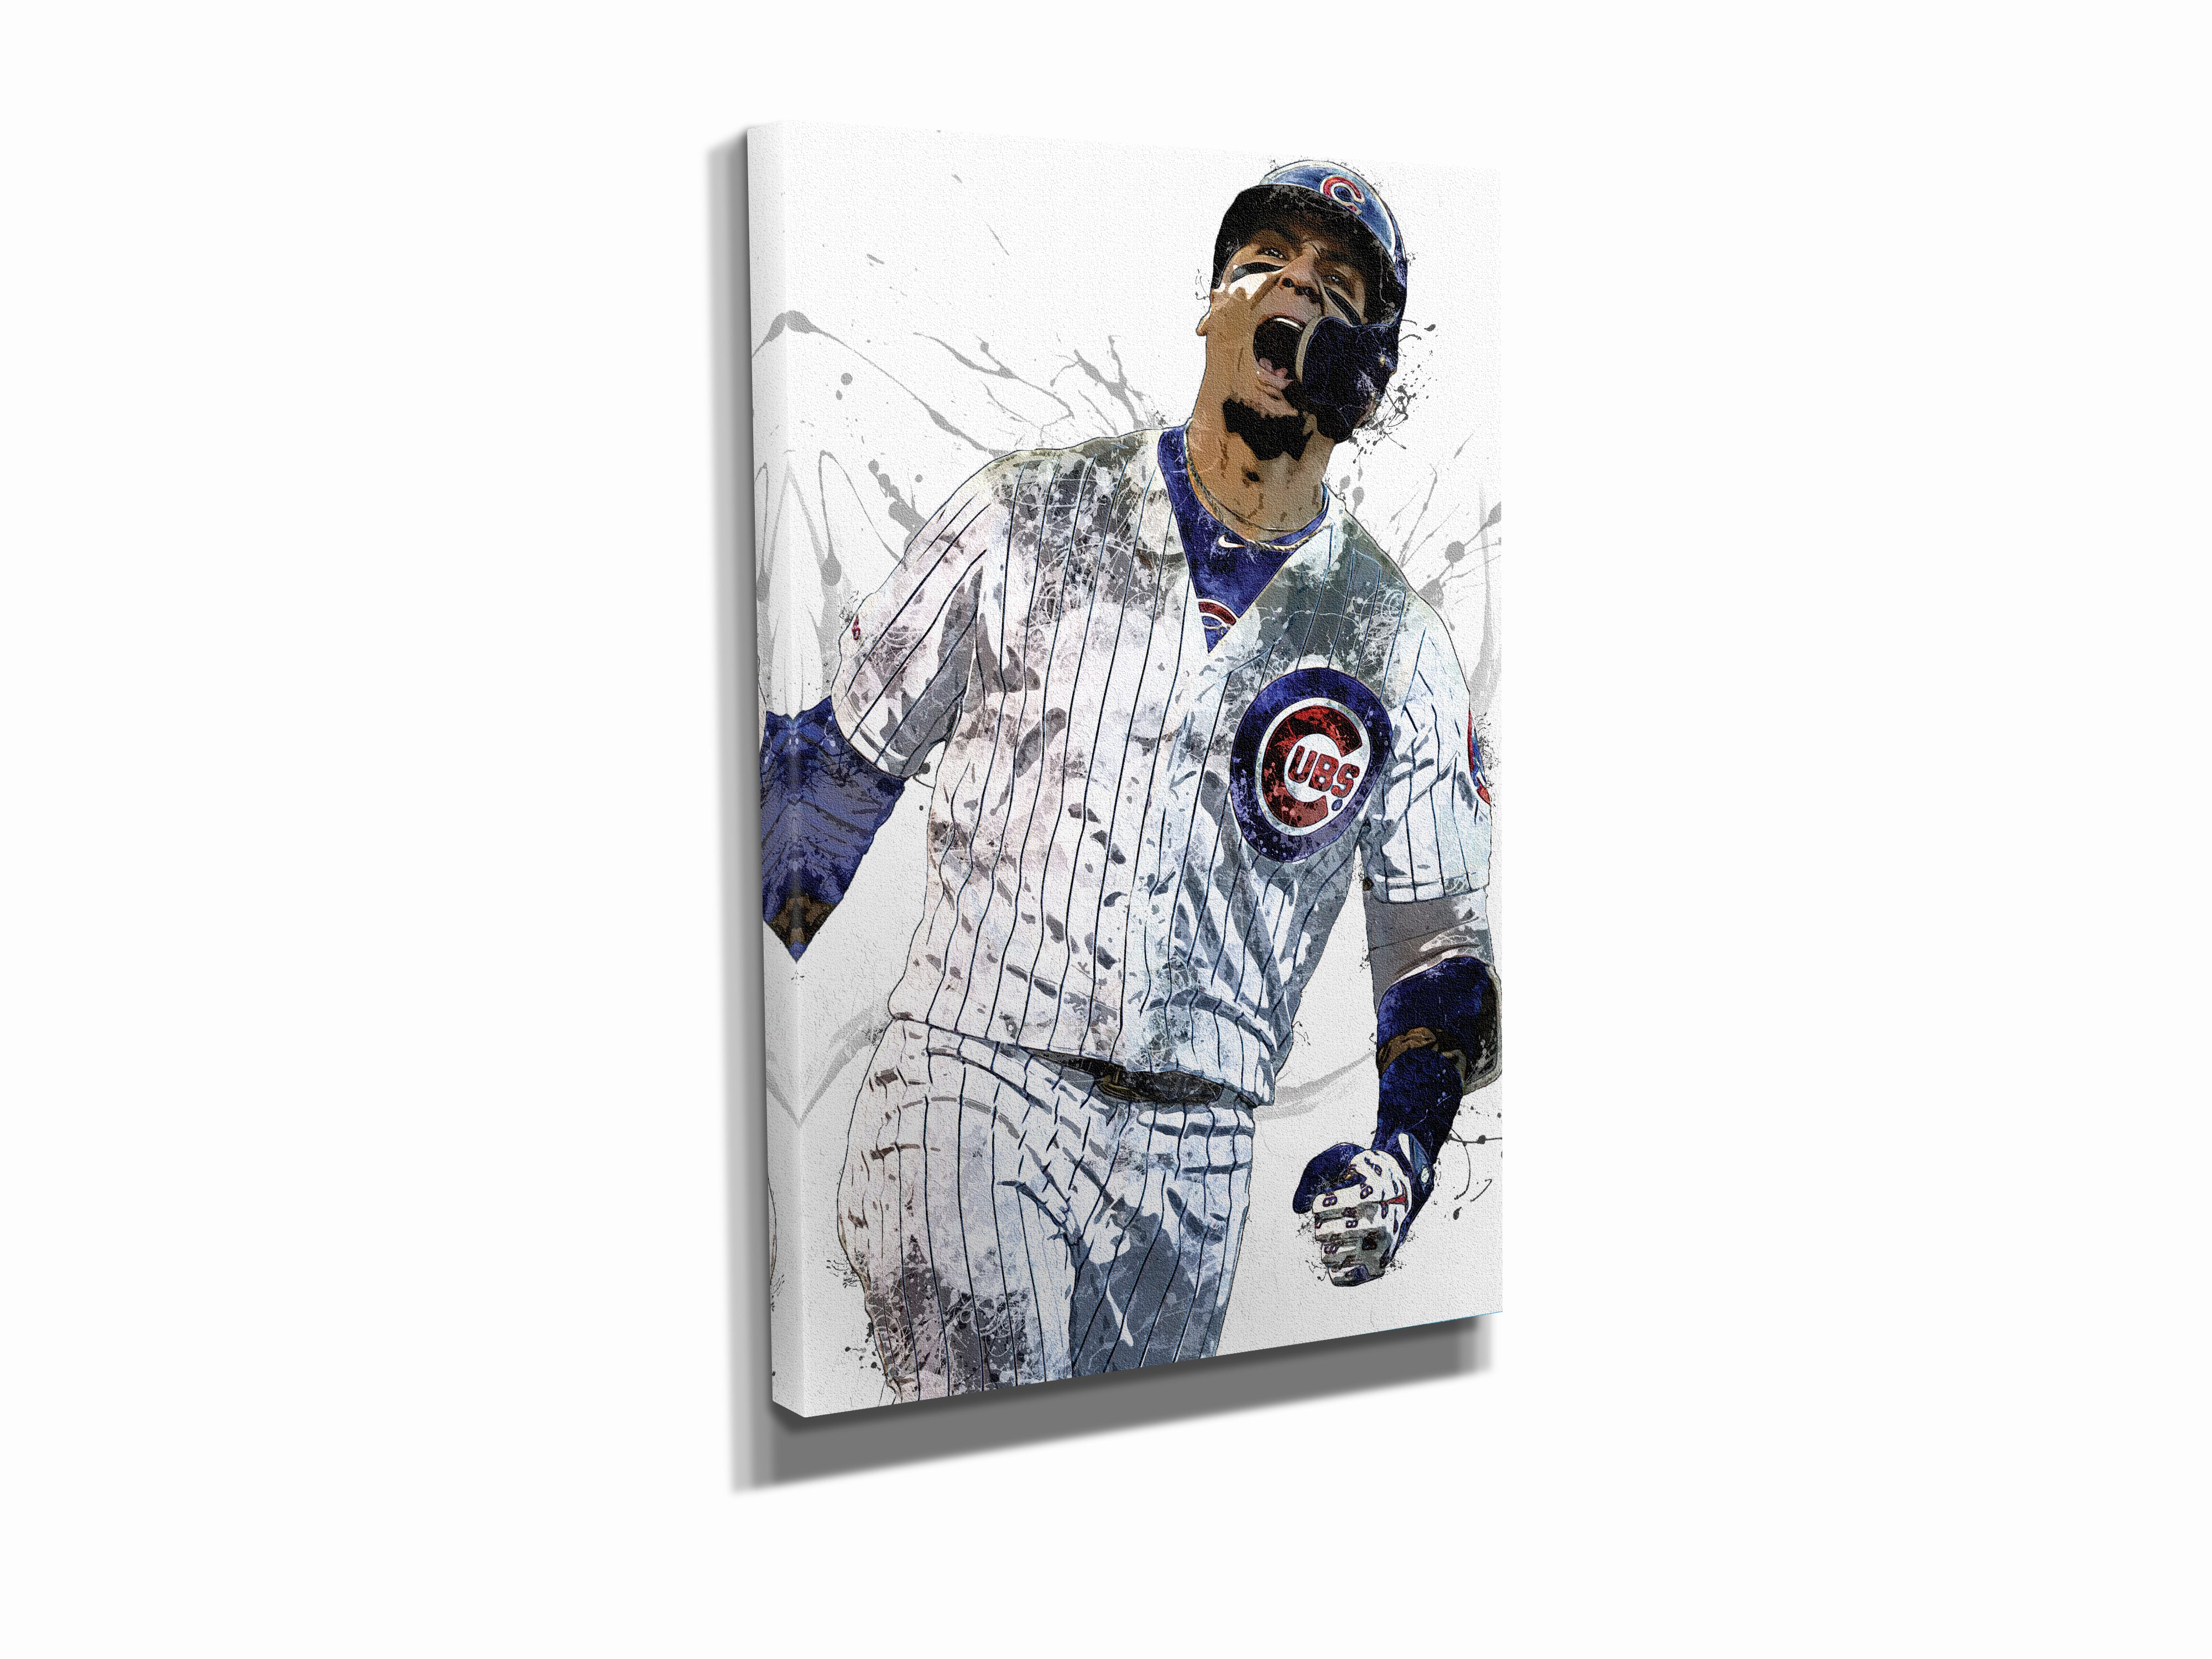  Javier Baez Chicago Cubs Poster Print, Baseball Player